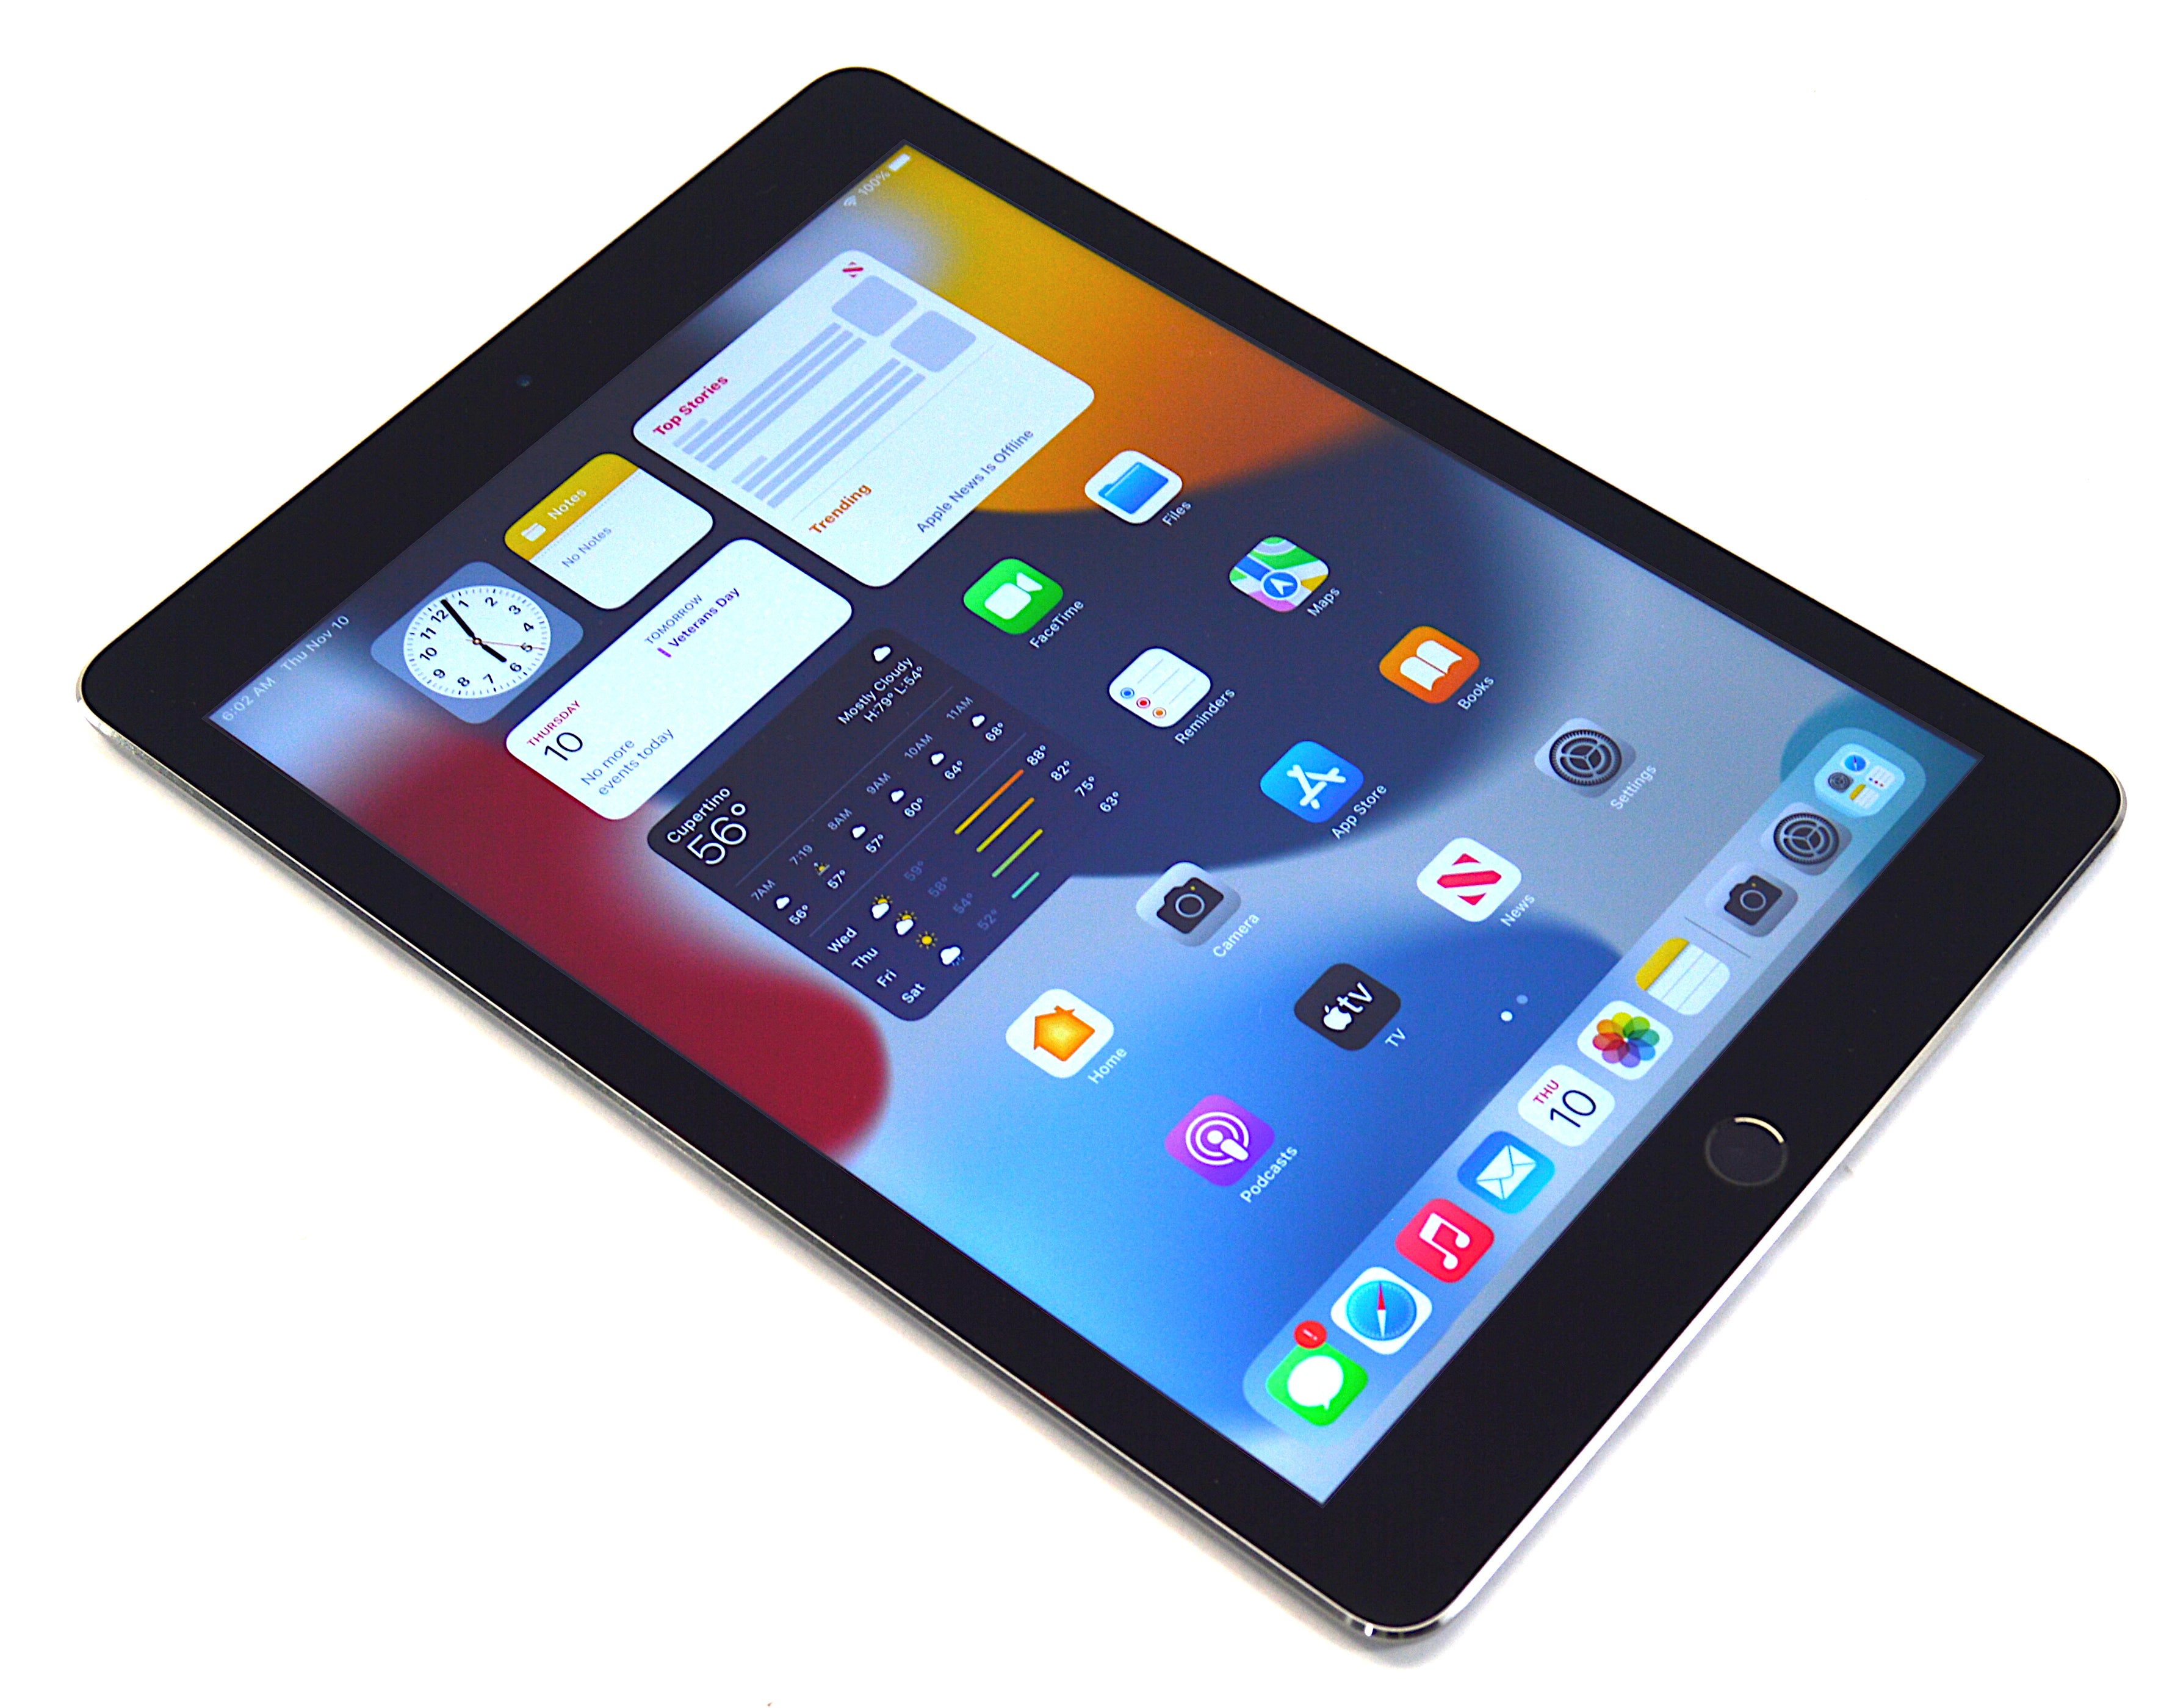 Apple iPad Air 2 Tablet, 16GB, WiFi + GSM, Unlocked, Space Grey, A1567